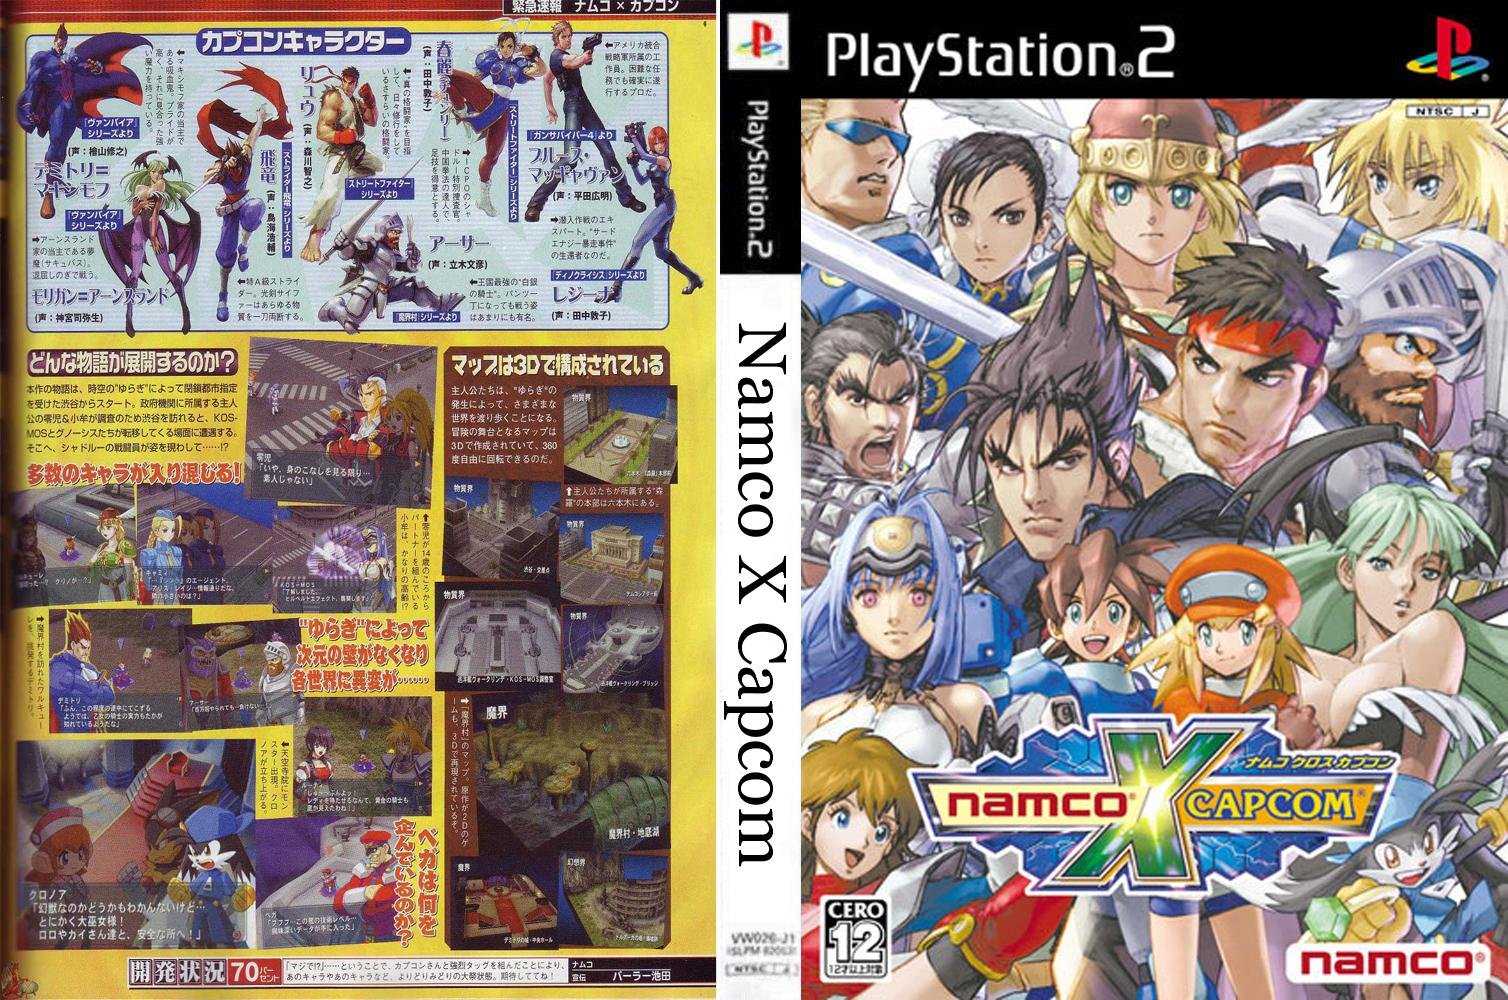 Namco X Capcom HD wallpapers, Desktop wallpaper - most viewed